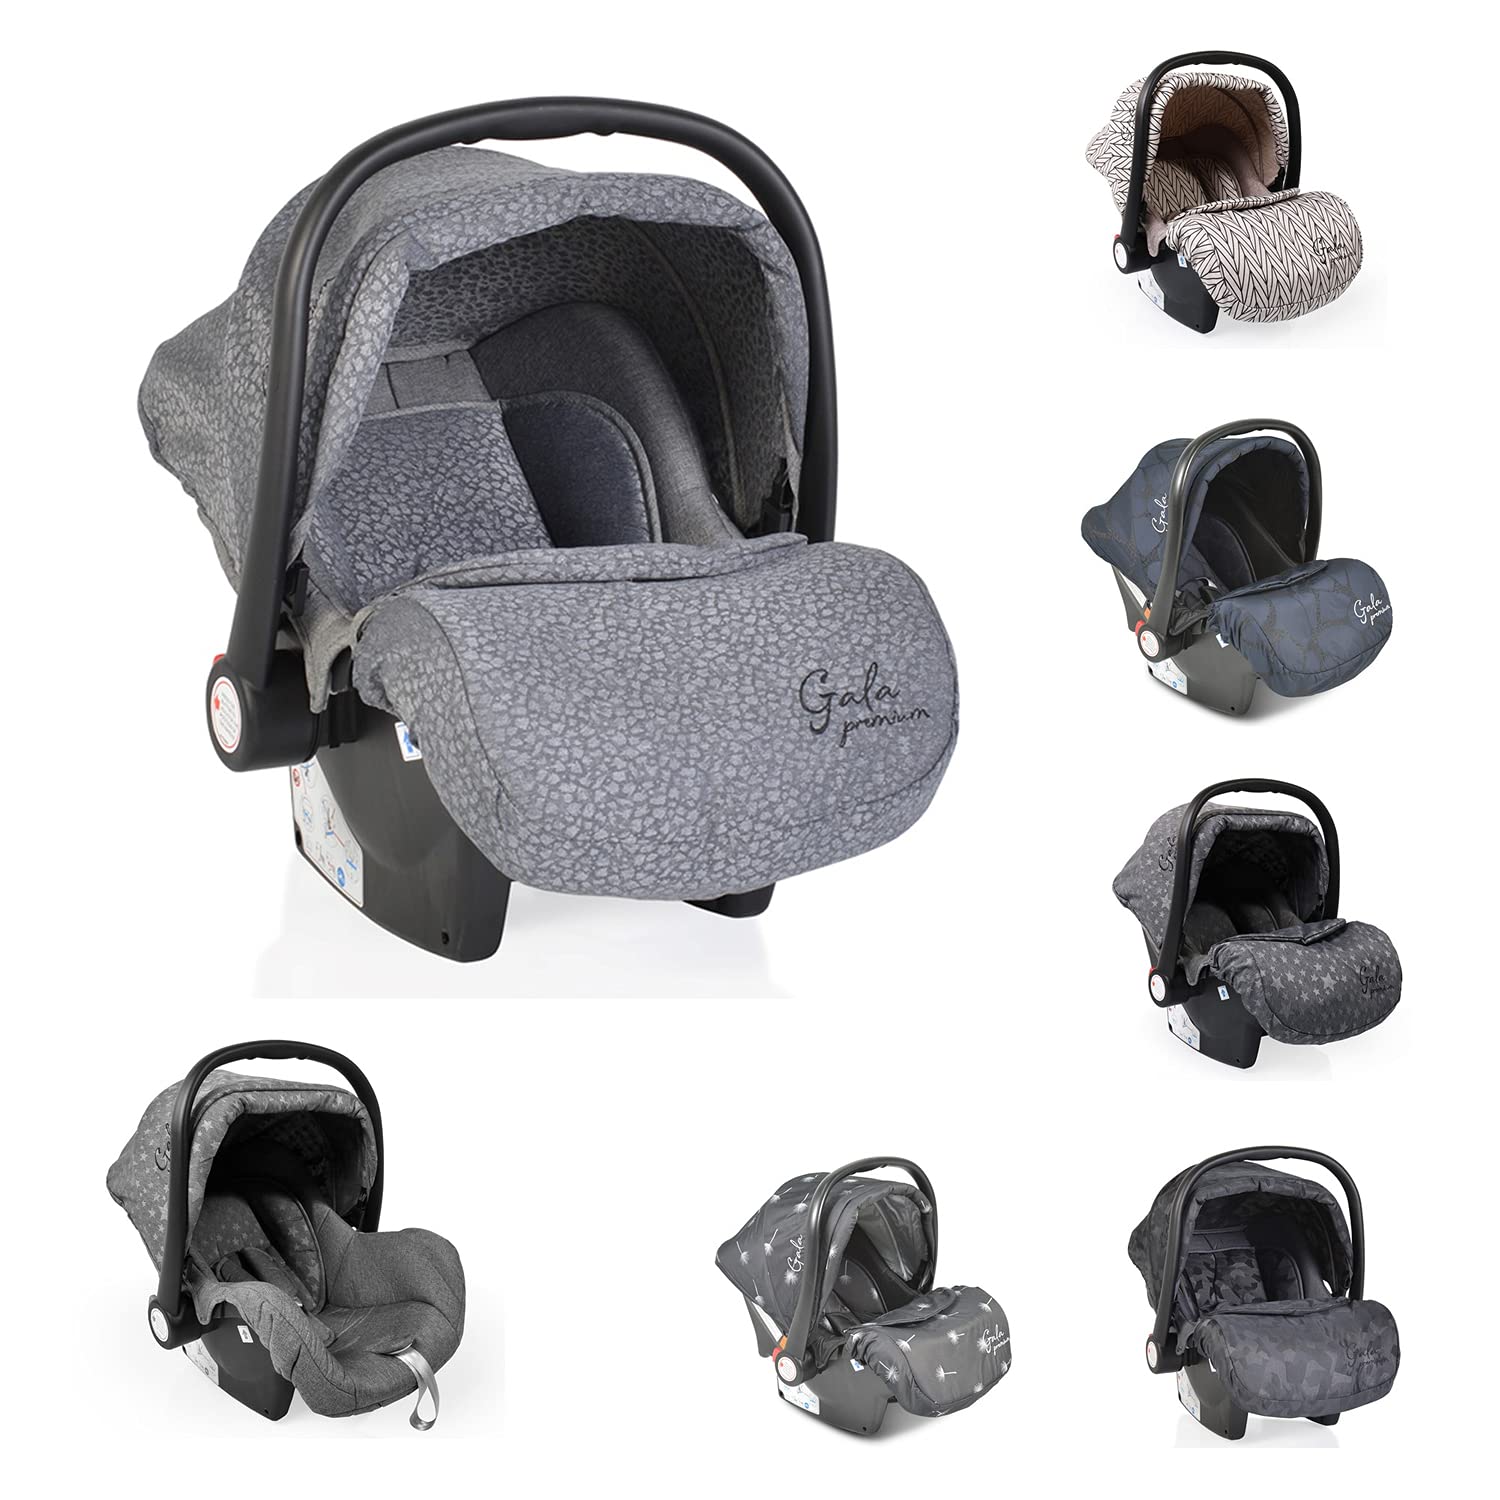 Moni Gala Premium Baby Car Seat Group 0+ (0-13 kg) Foot Cover Seat Pad Colour: Light Grey